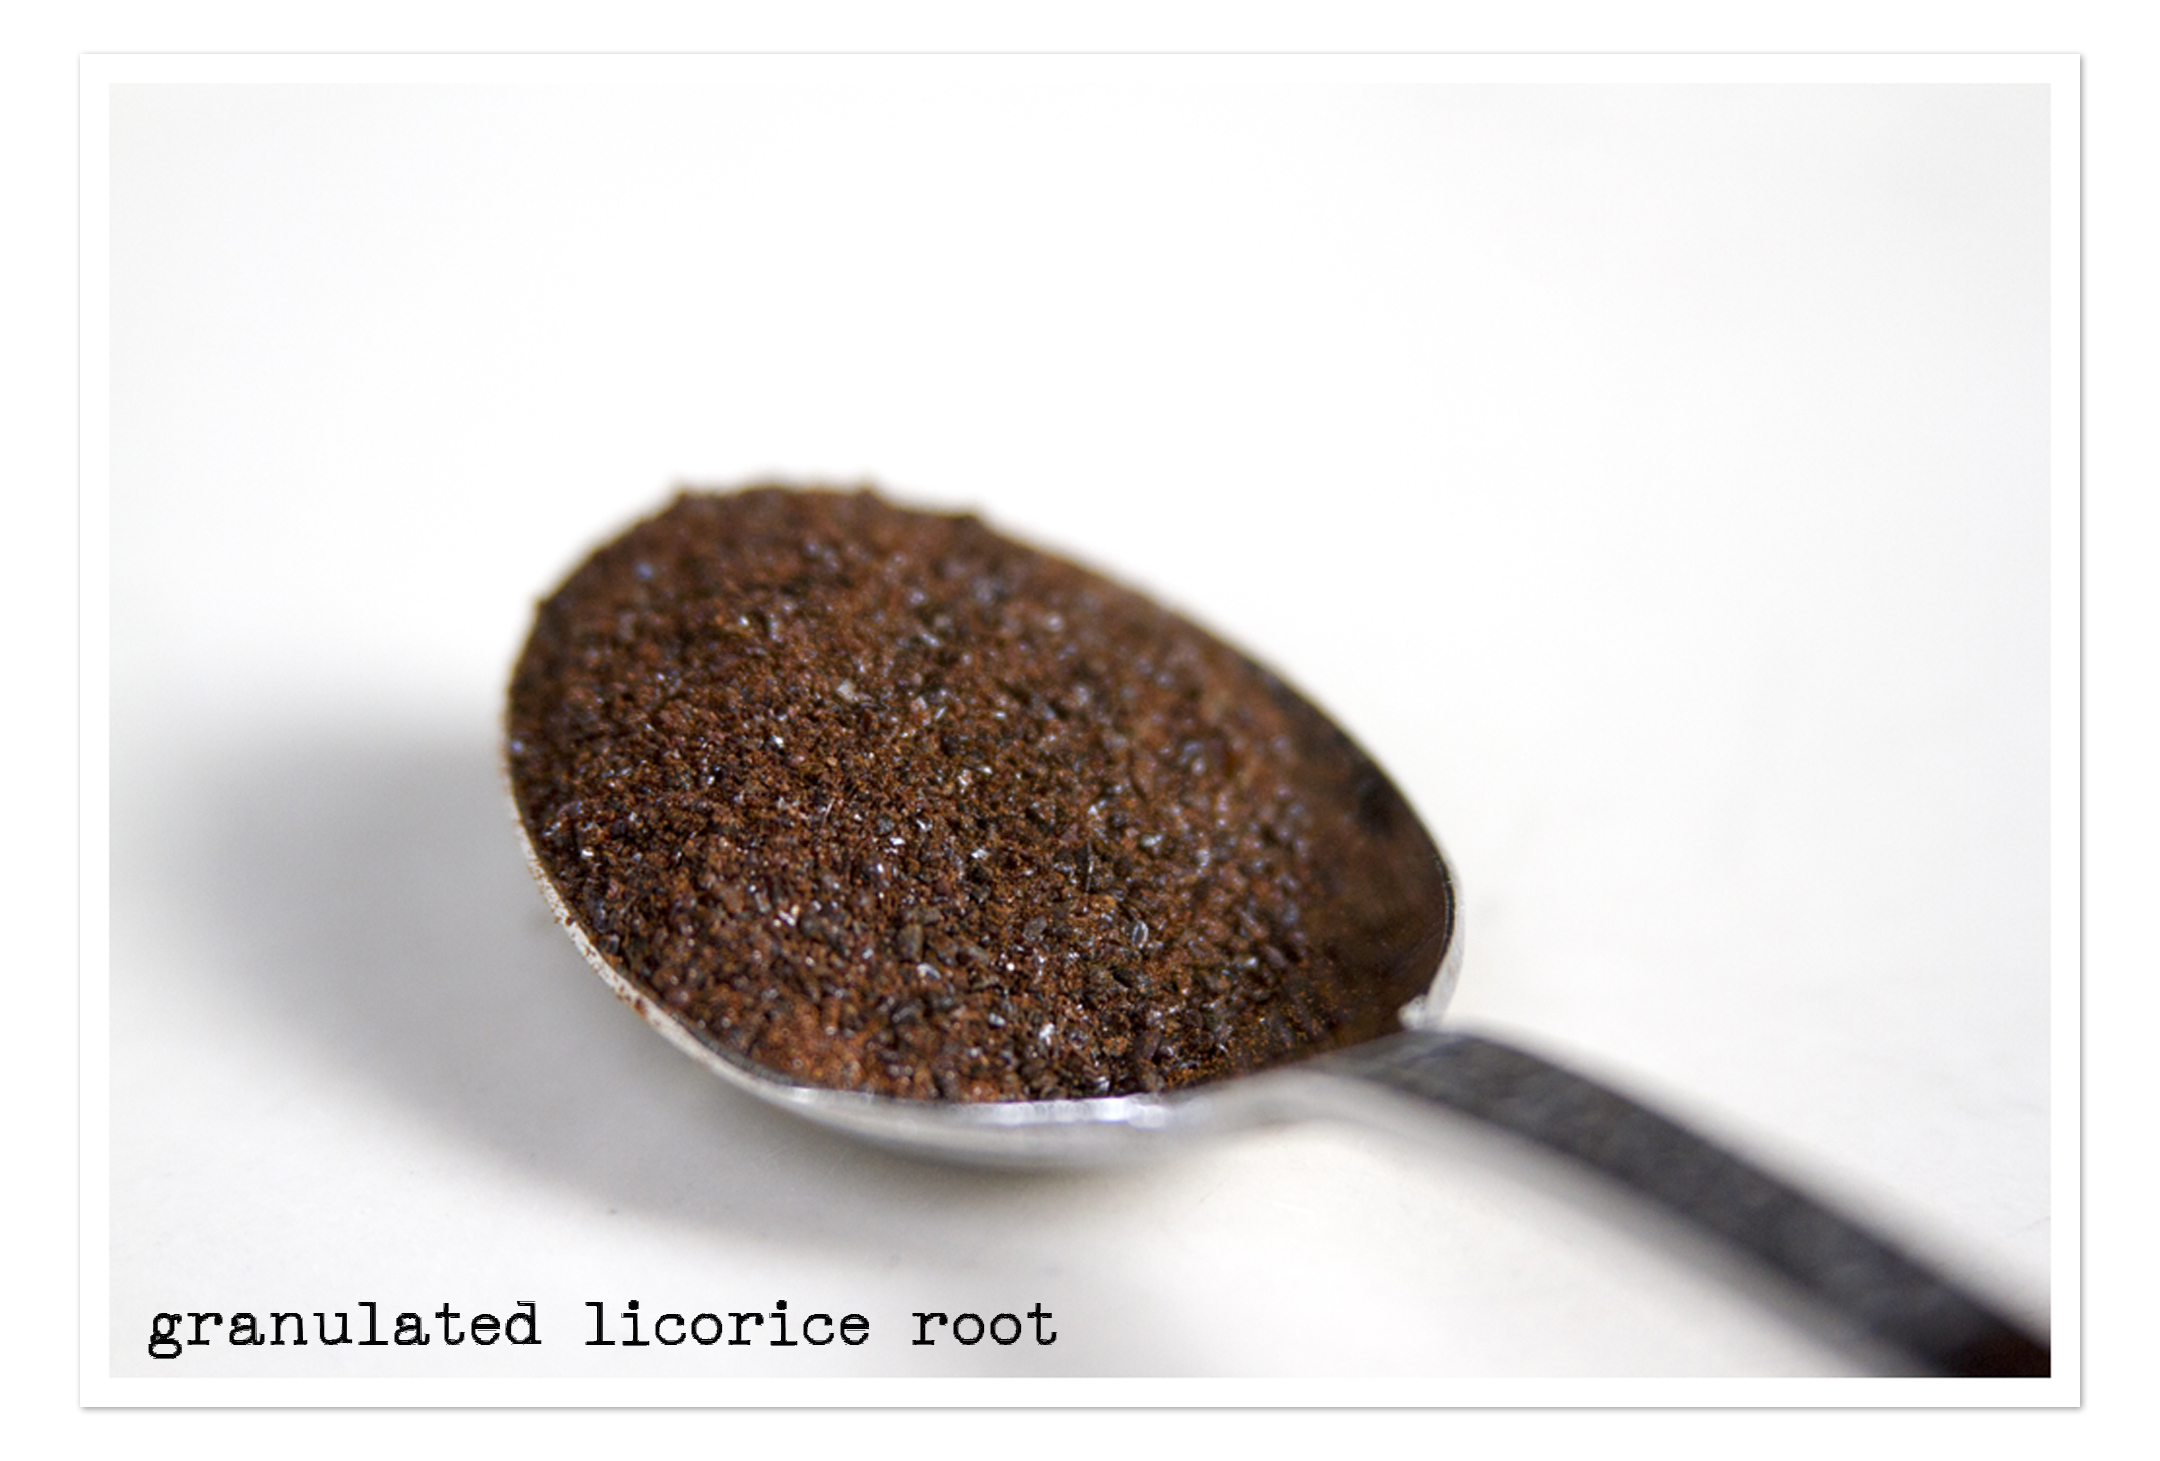 Granulated licorice root